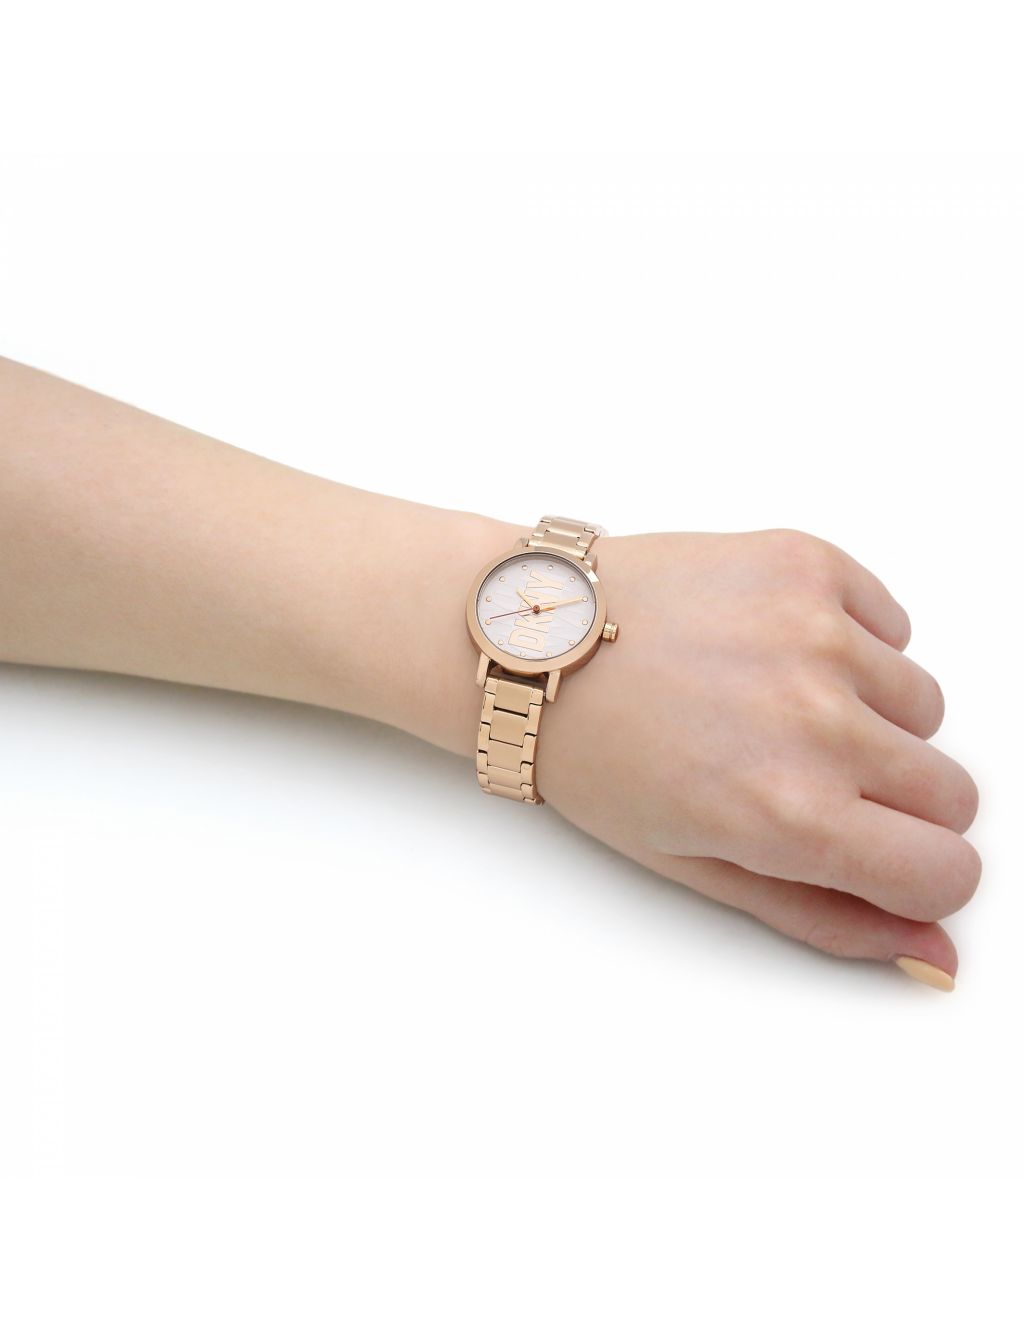 DKNY Soho Metal Bracelet Watch image 2